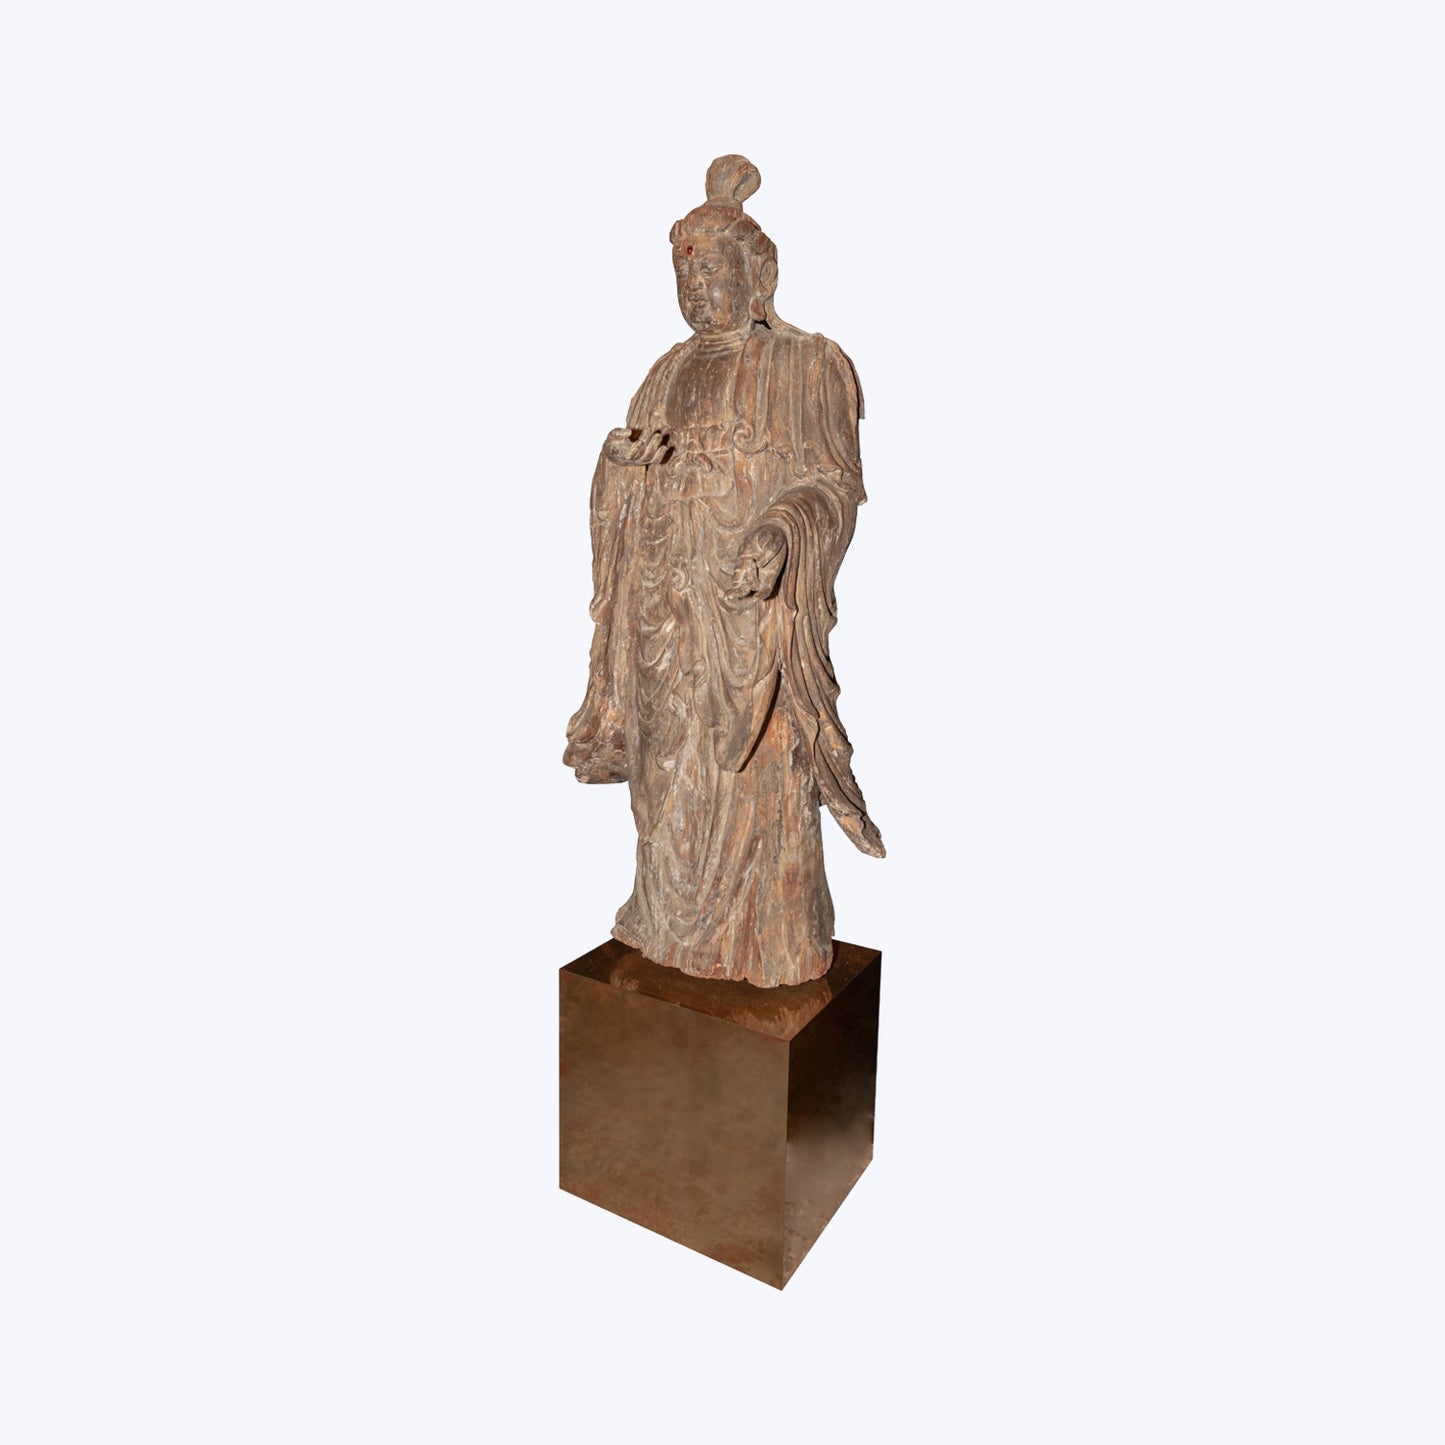 Ming Dynasty Guan Yin Sculpture (Standing)